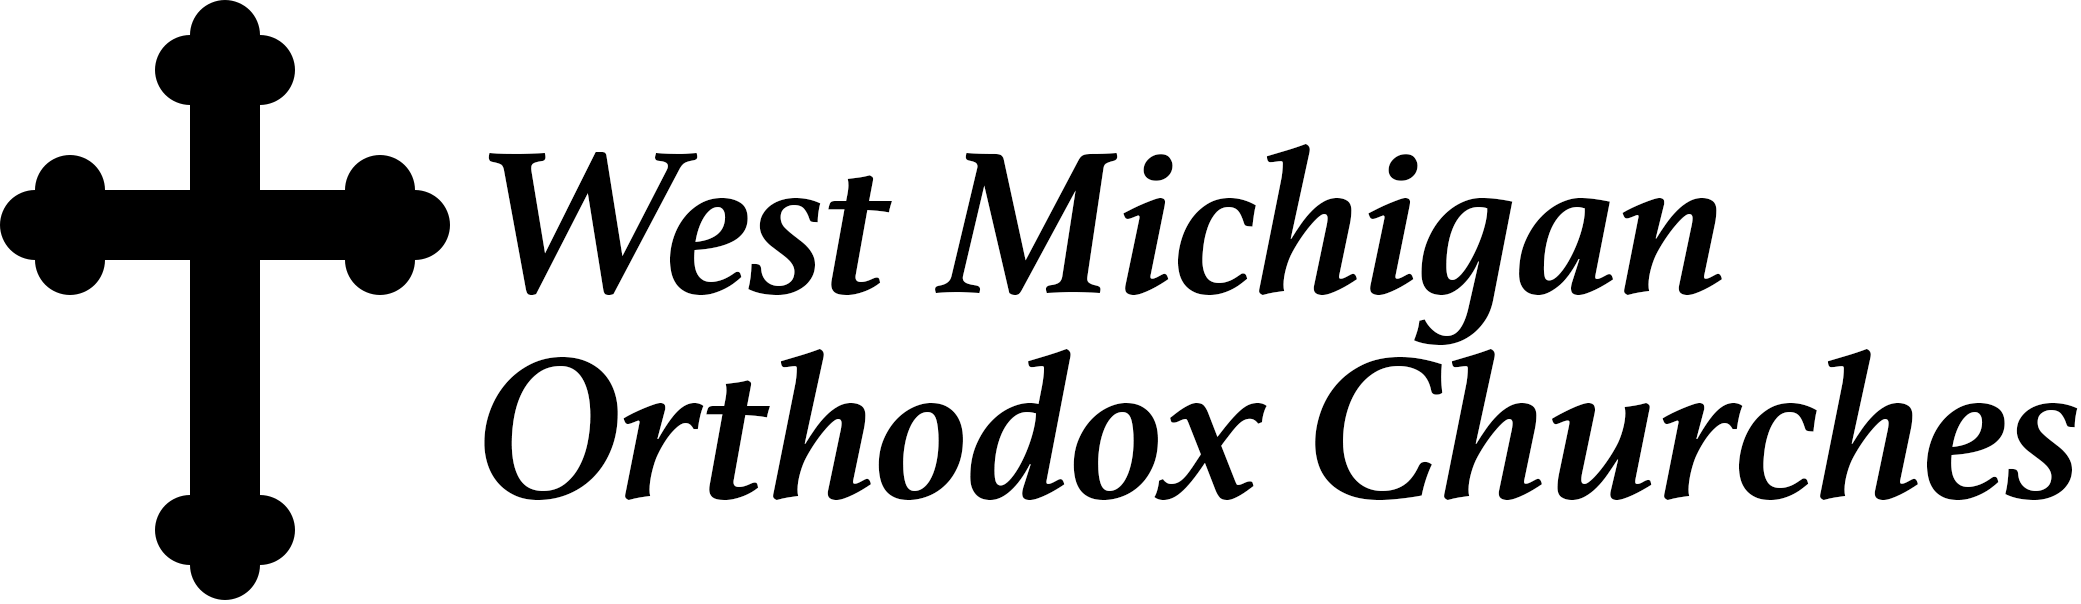 West Michigan Orthodox Churches